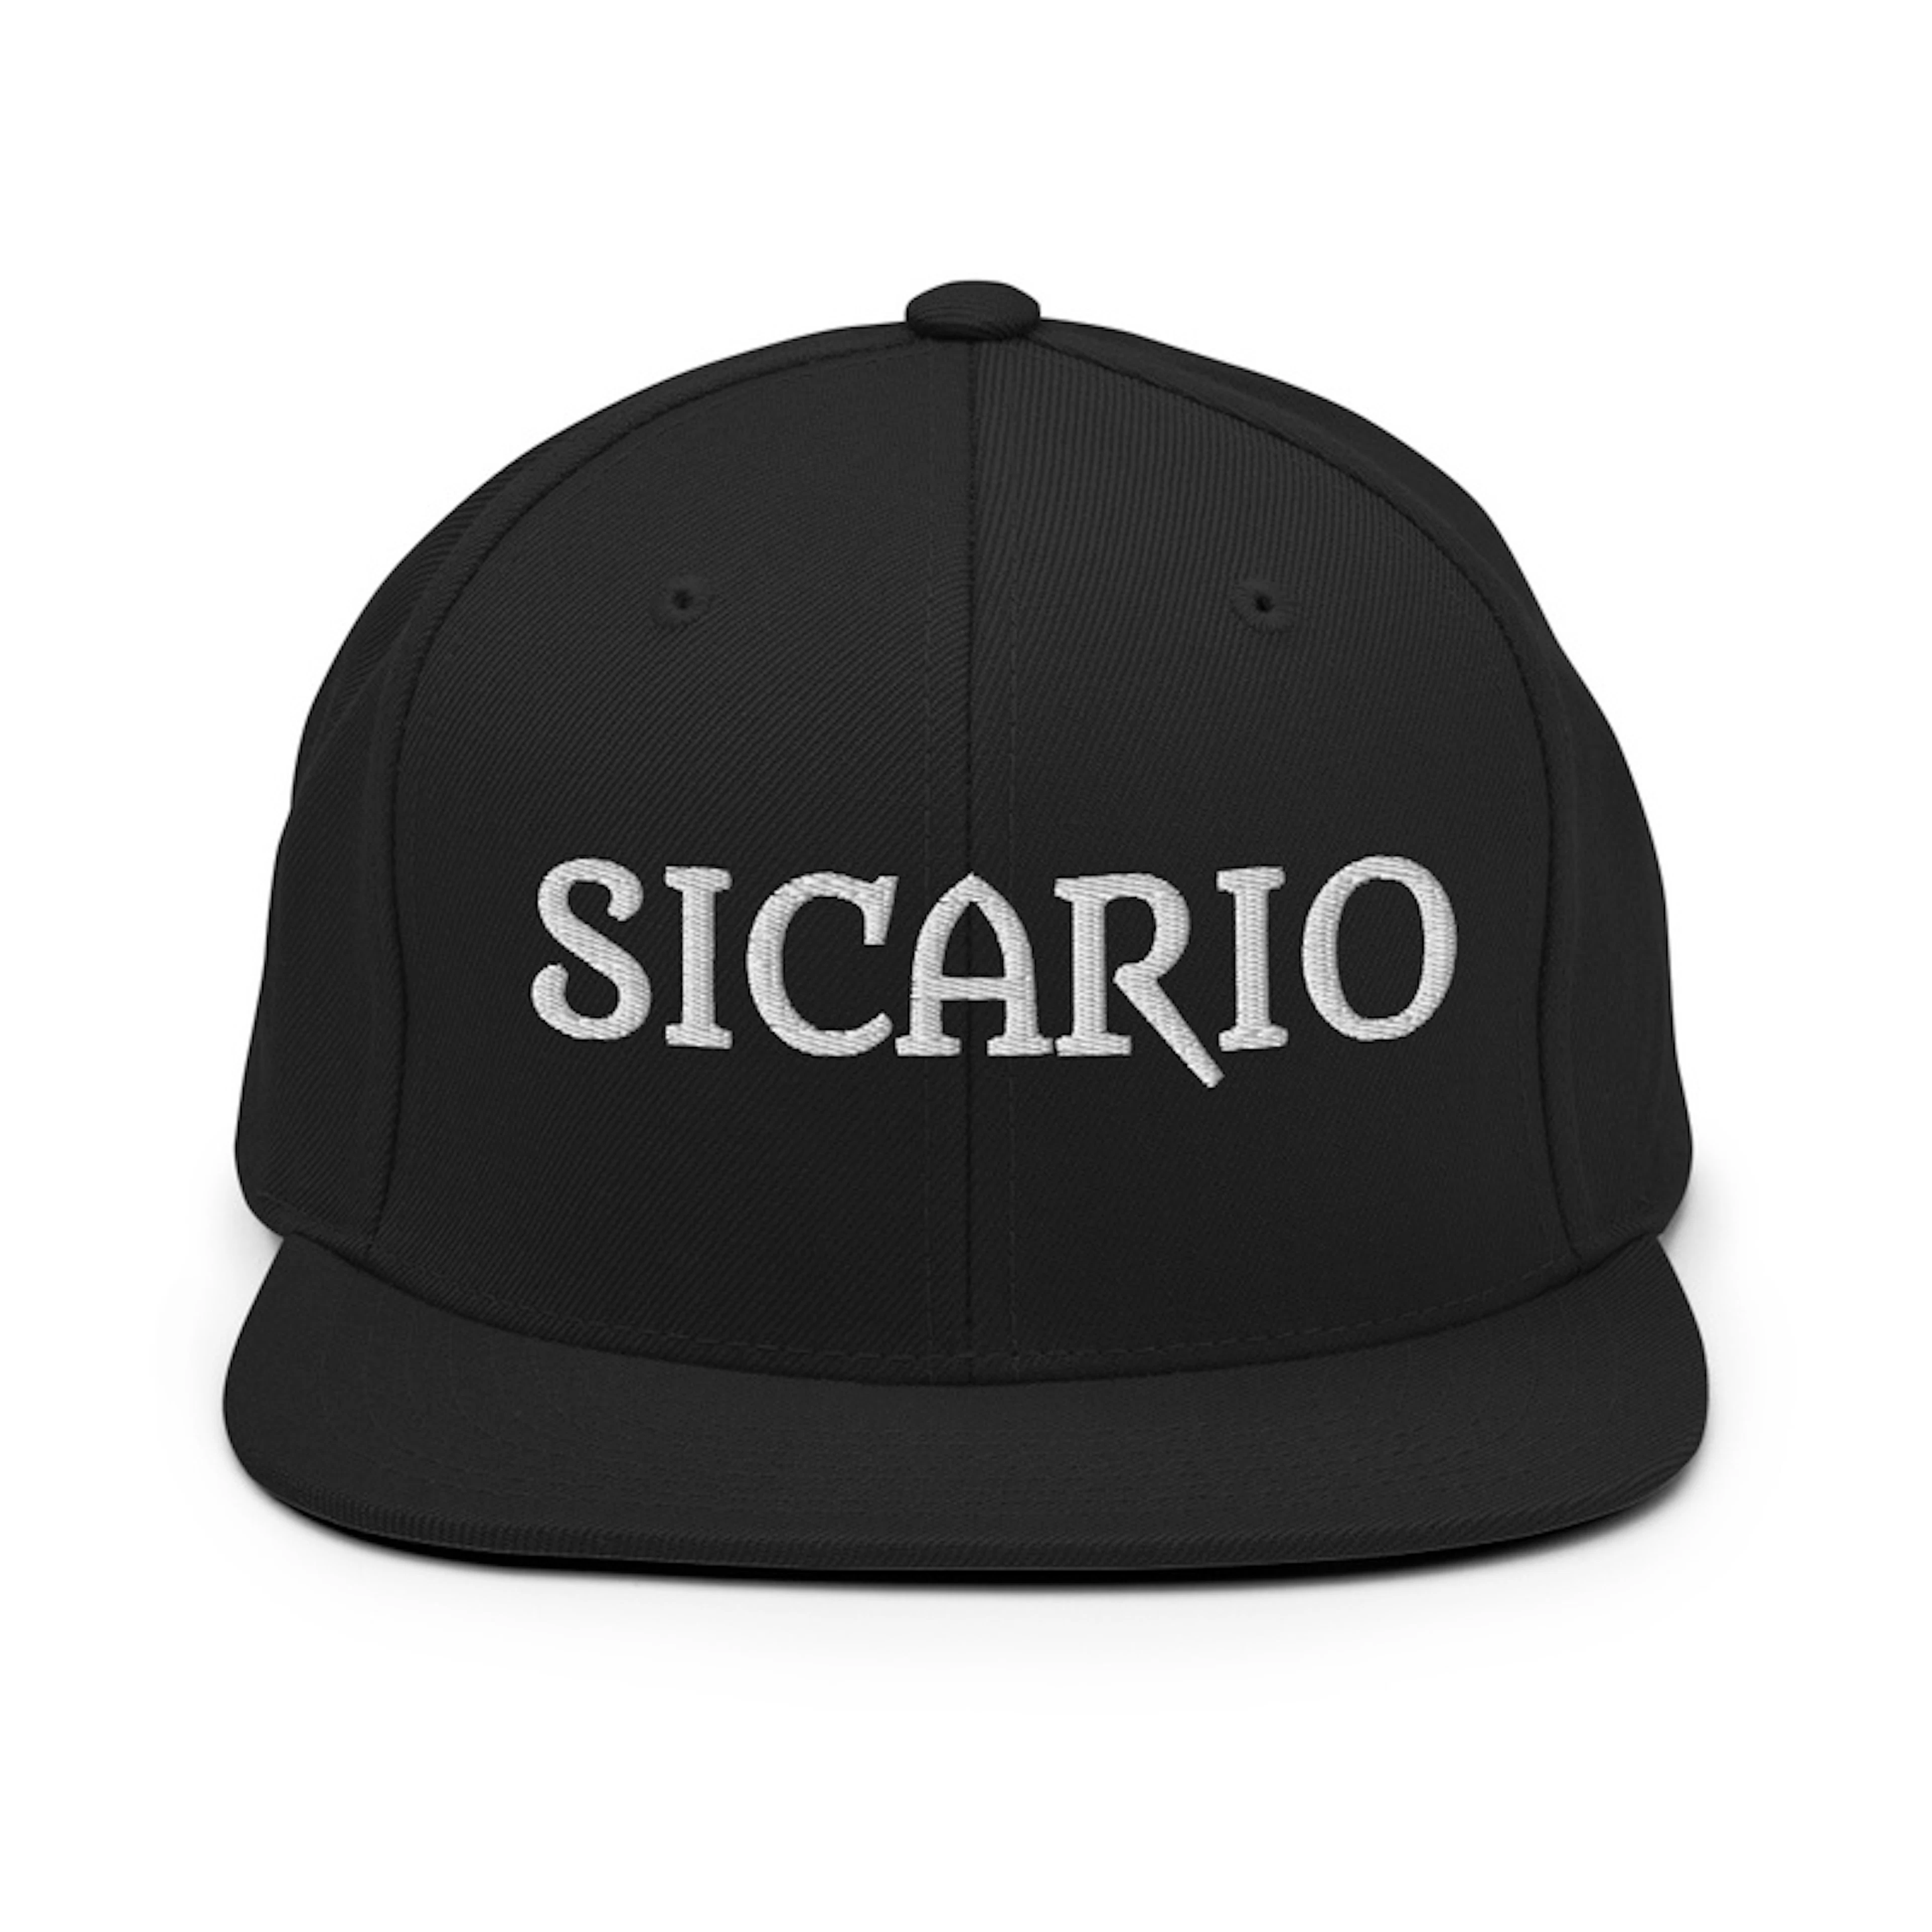 SICARIO Hat - White Letters